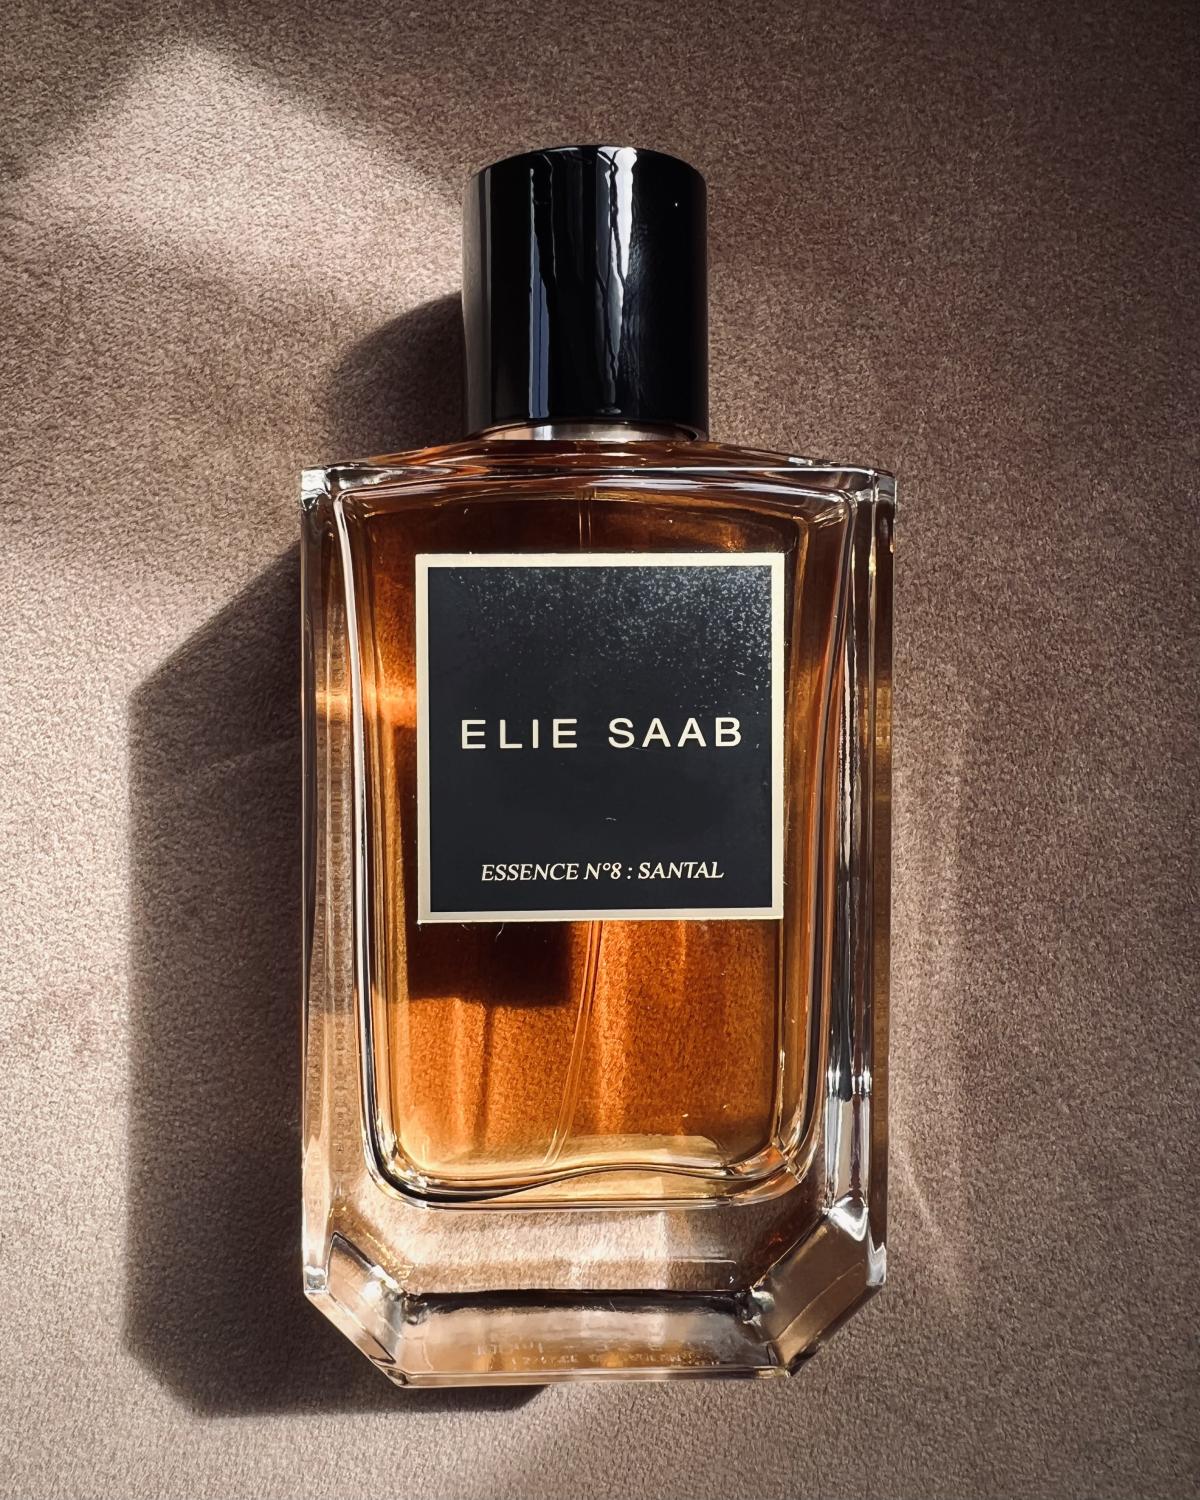 Essence No. 8 Santal Elie Saab perfume - a fragrance for women and men 2016